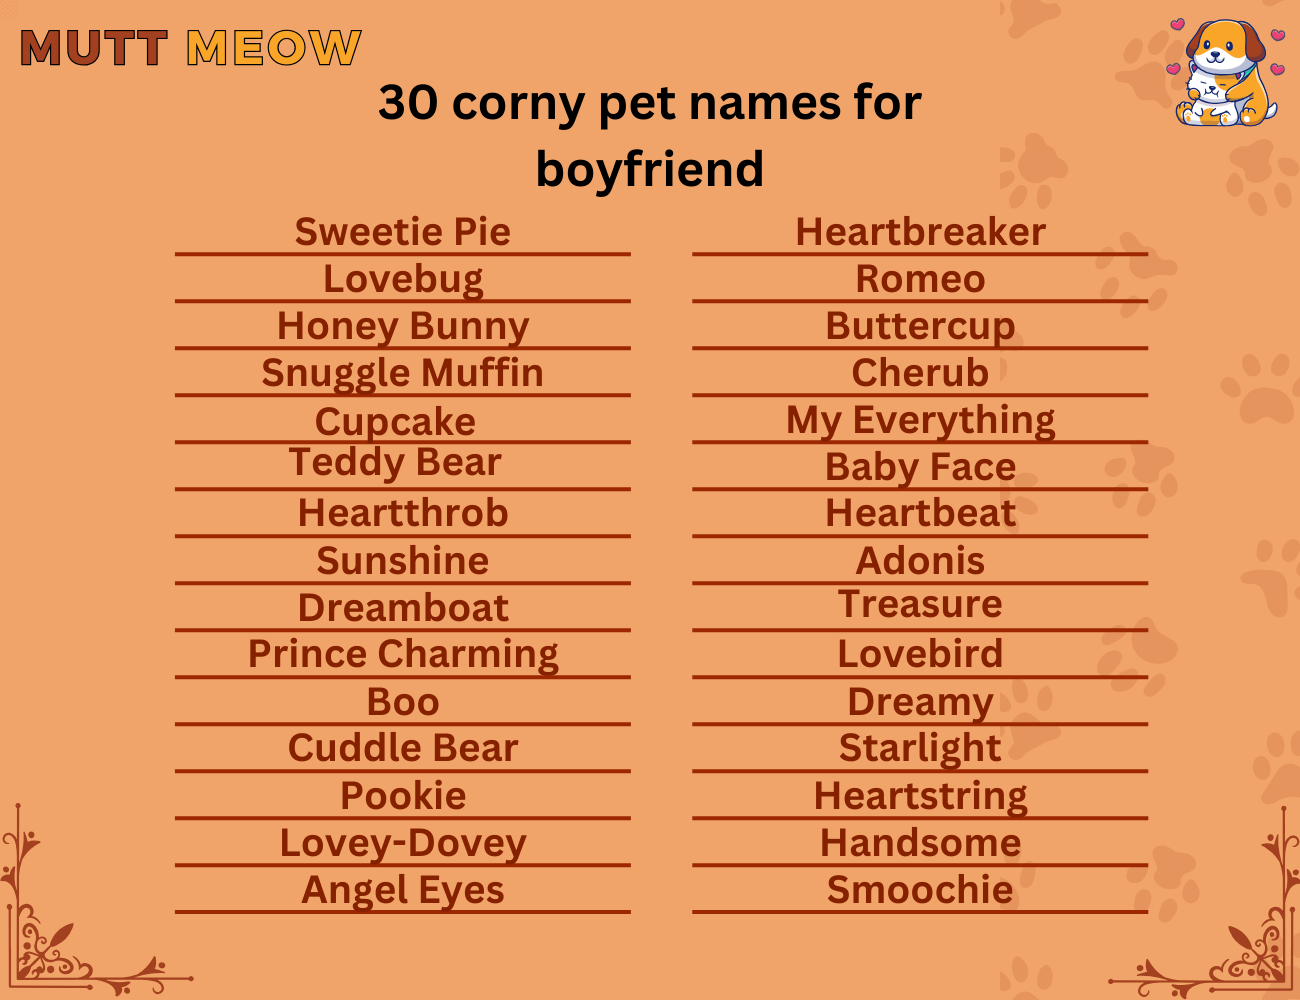 30 corny pet names for boyfriend